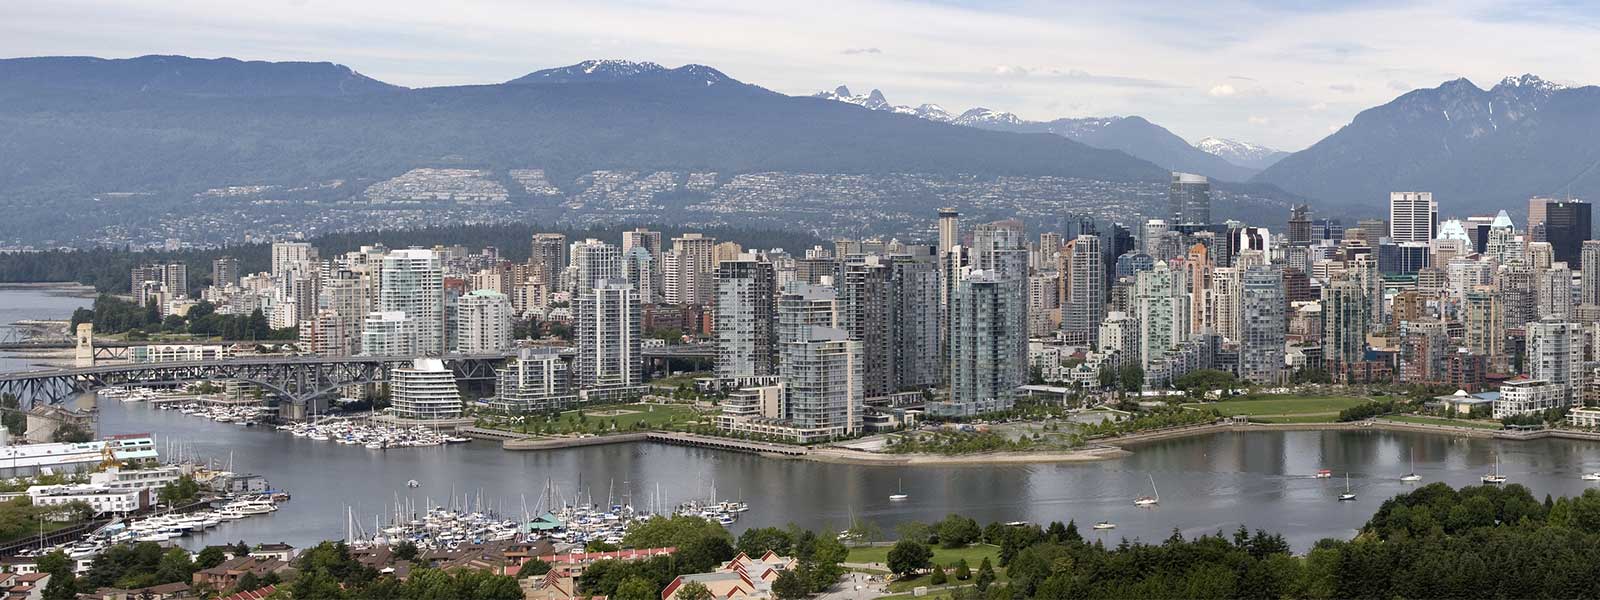 Bridgemans announces head office relocation to Vancouver, BC